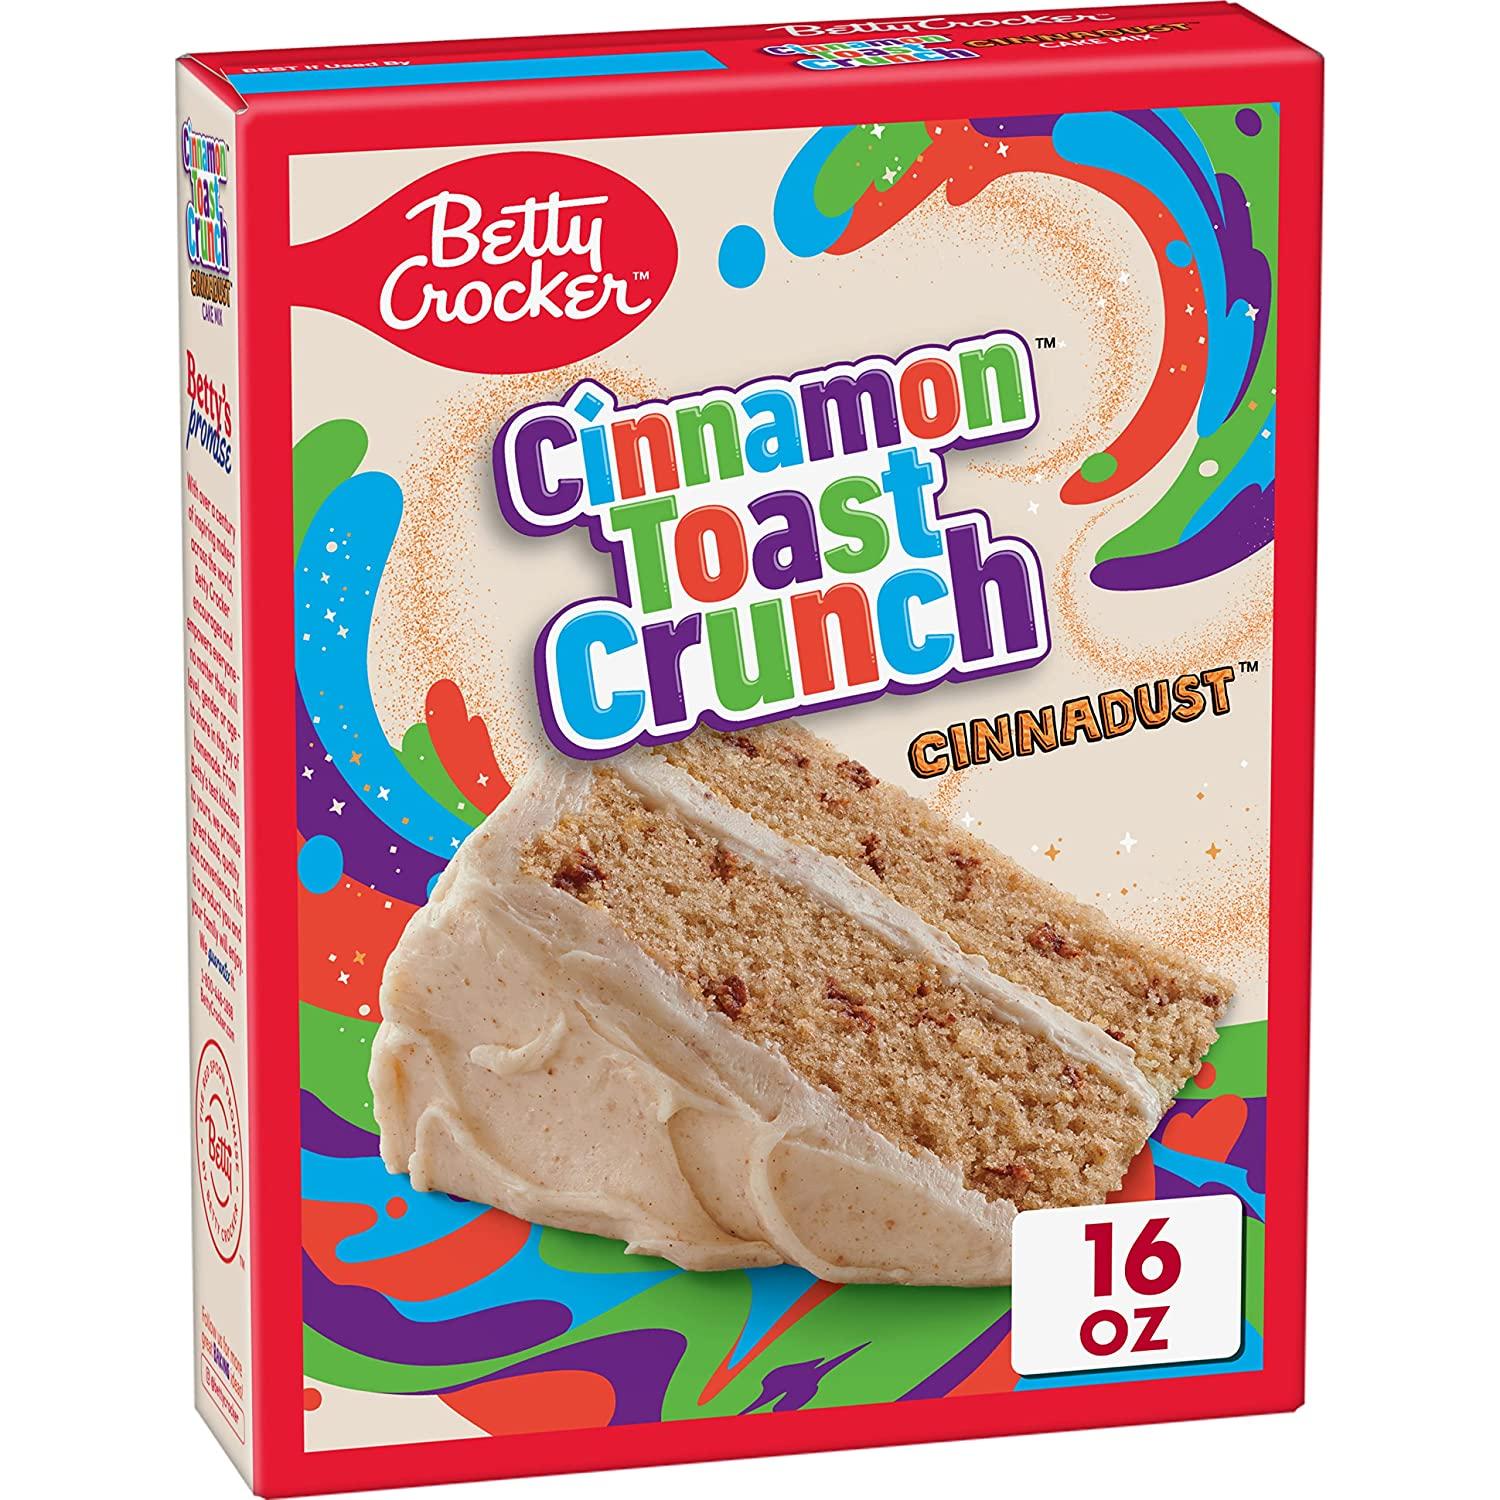 Betty Crocker Cinnamon Toast Crunch Cake Mix for $1.42 Shipped